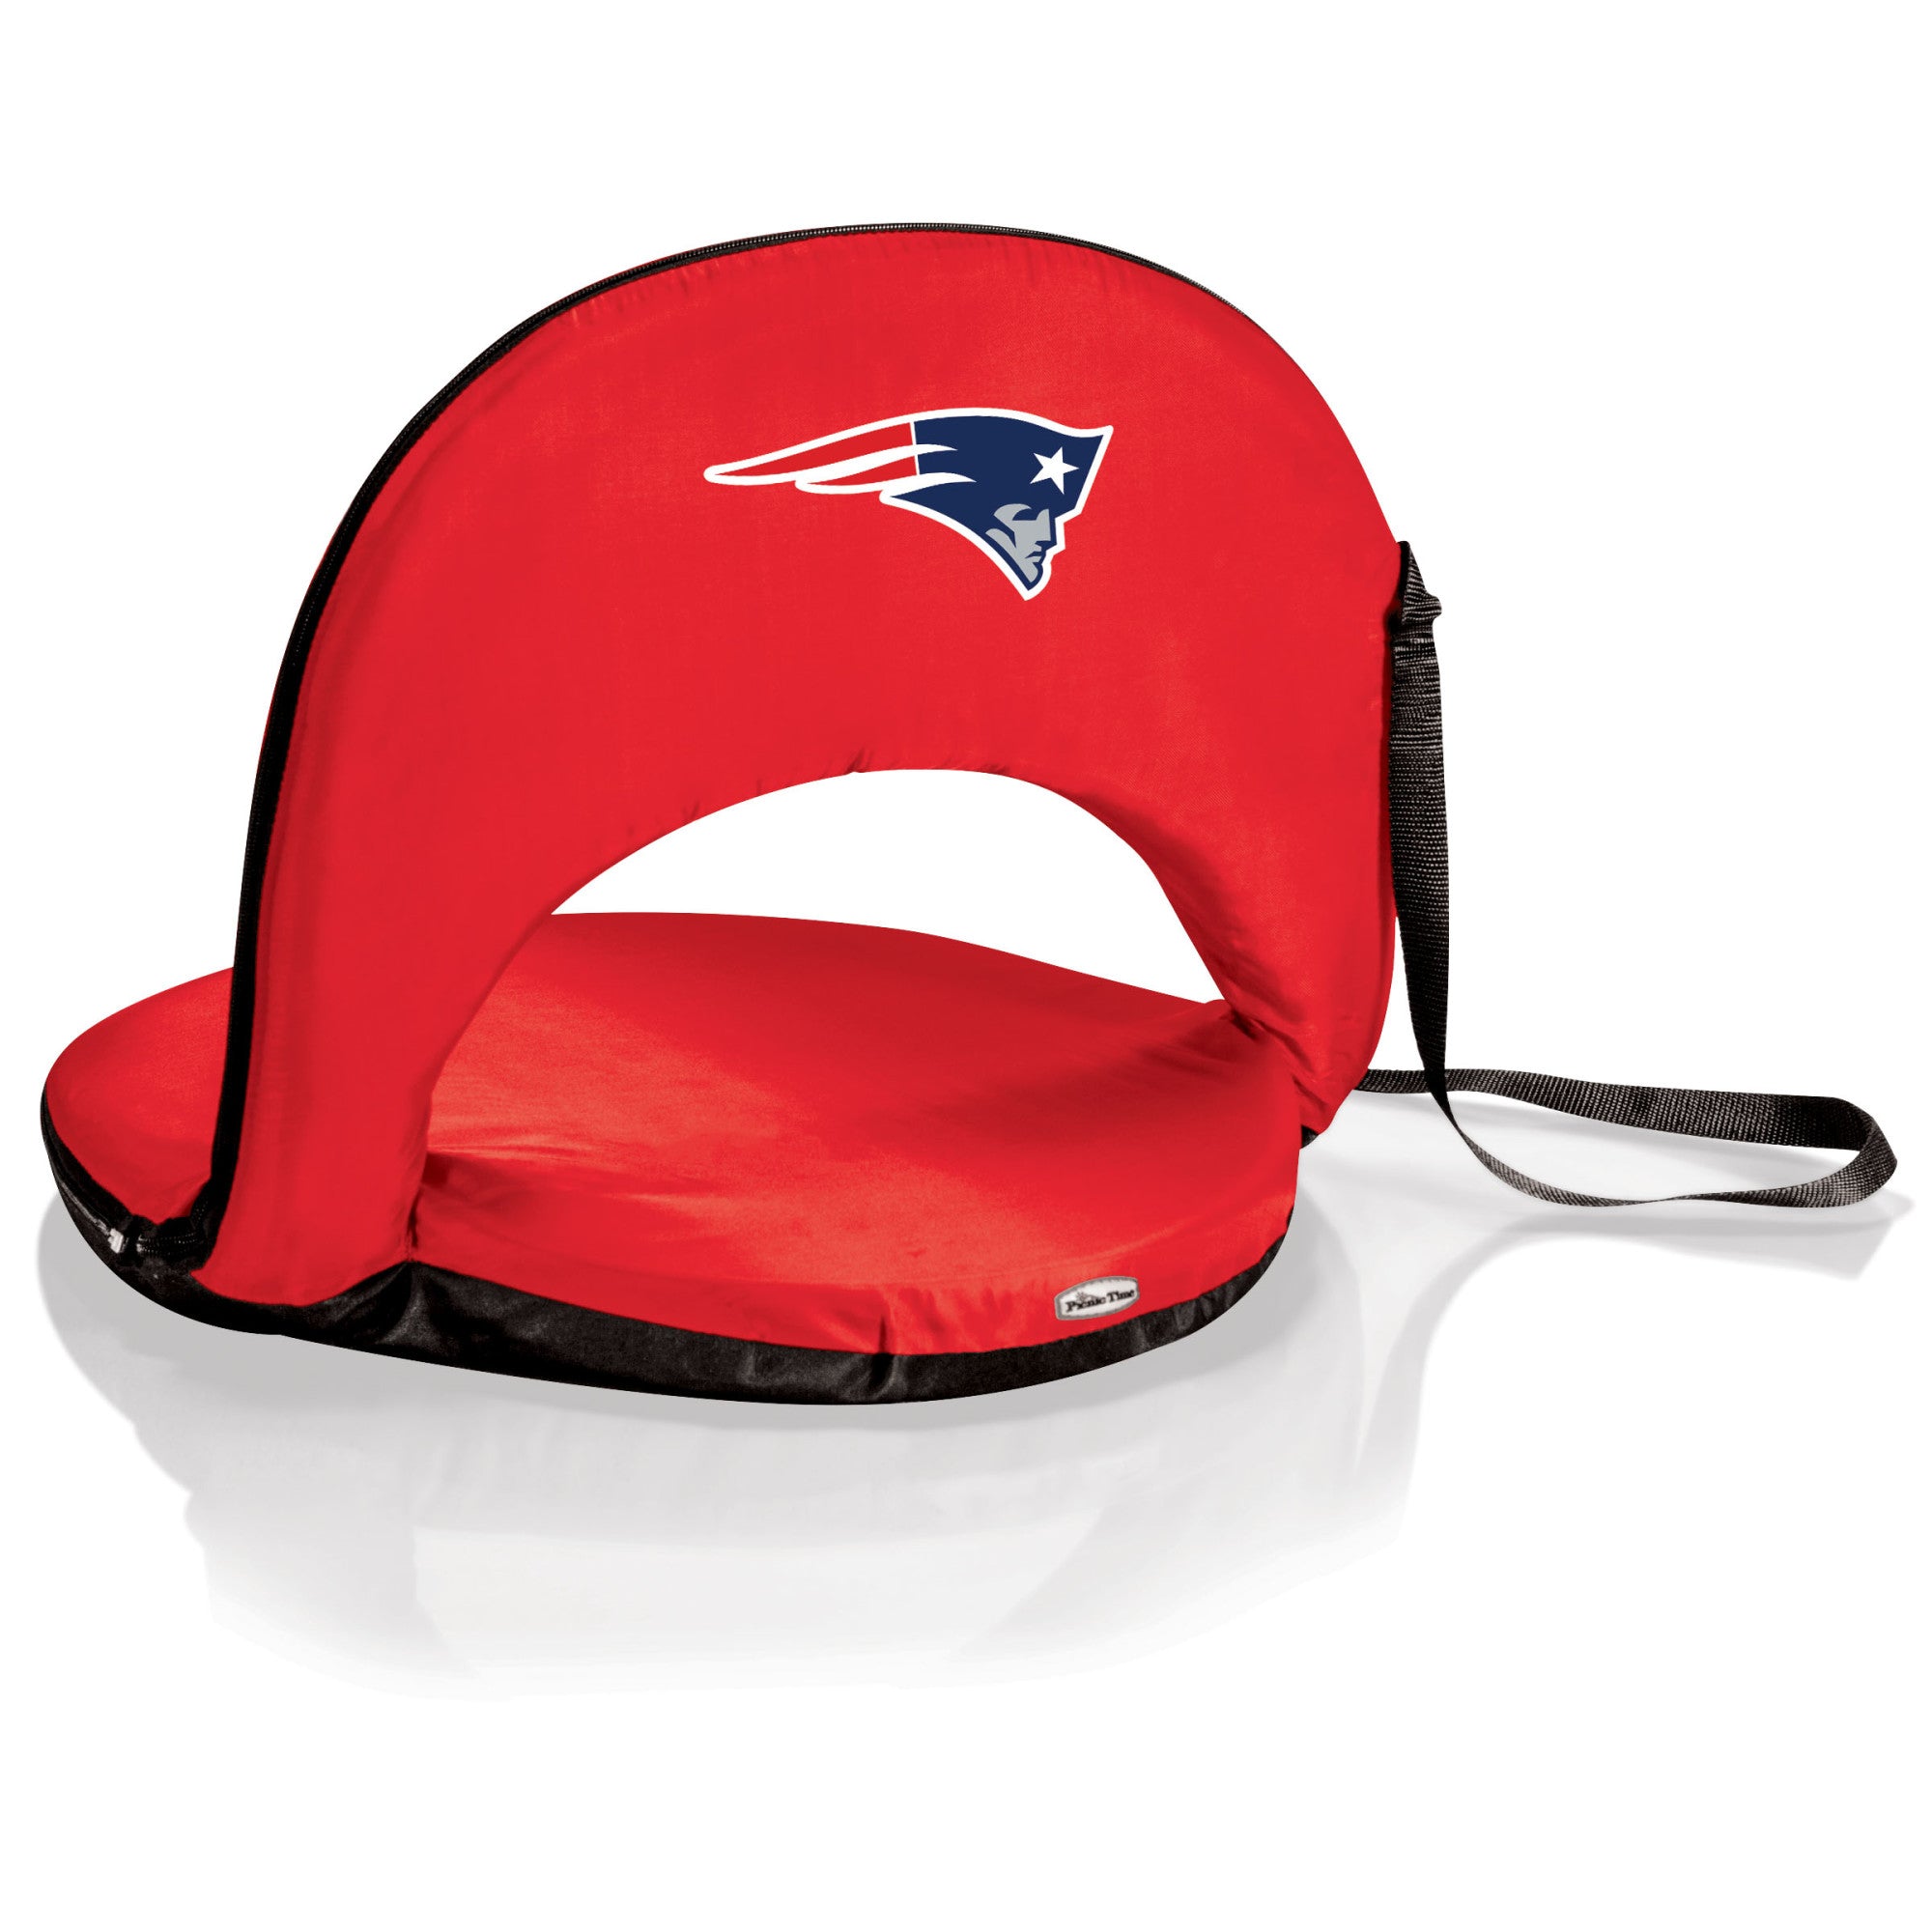 New England Patriots - Oniva Portable Reclining Seat